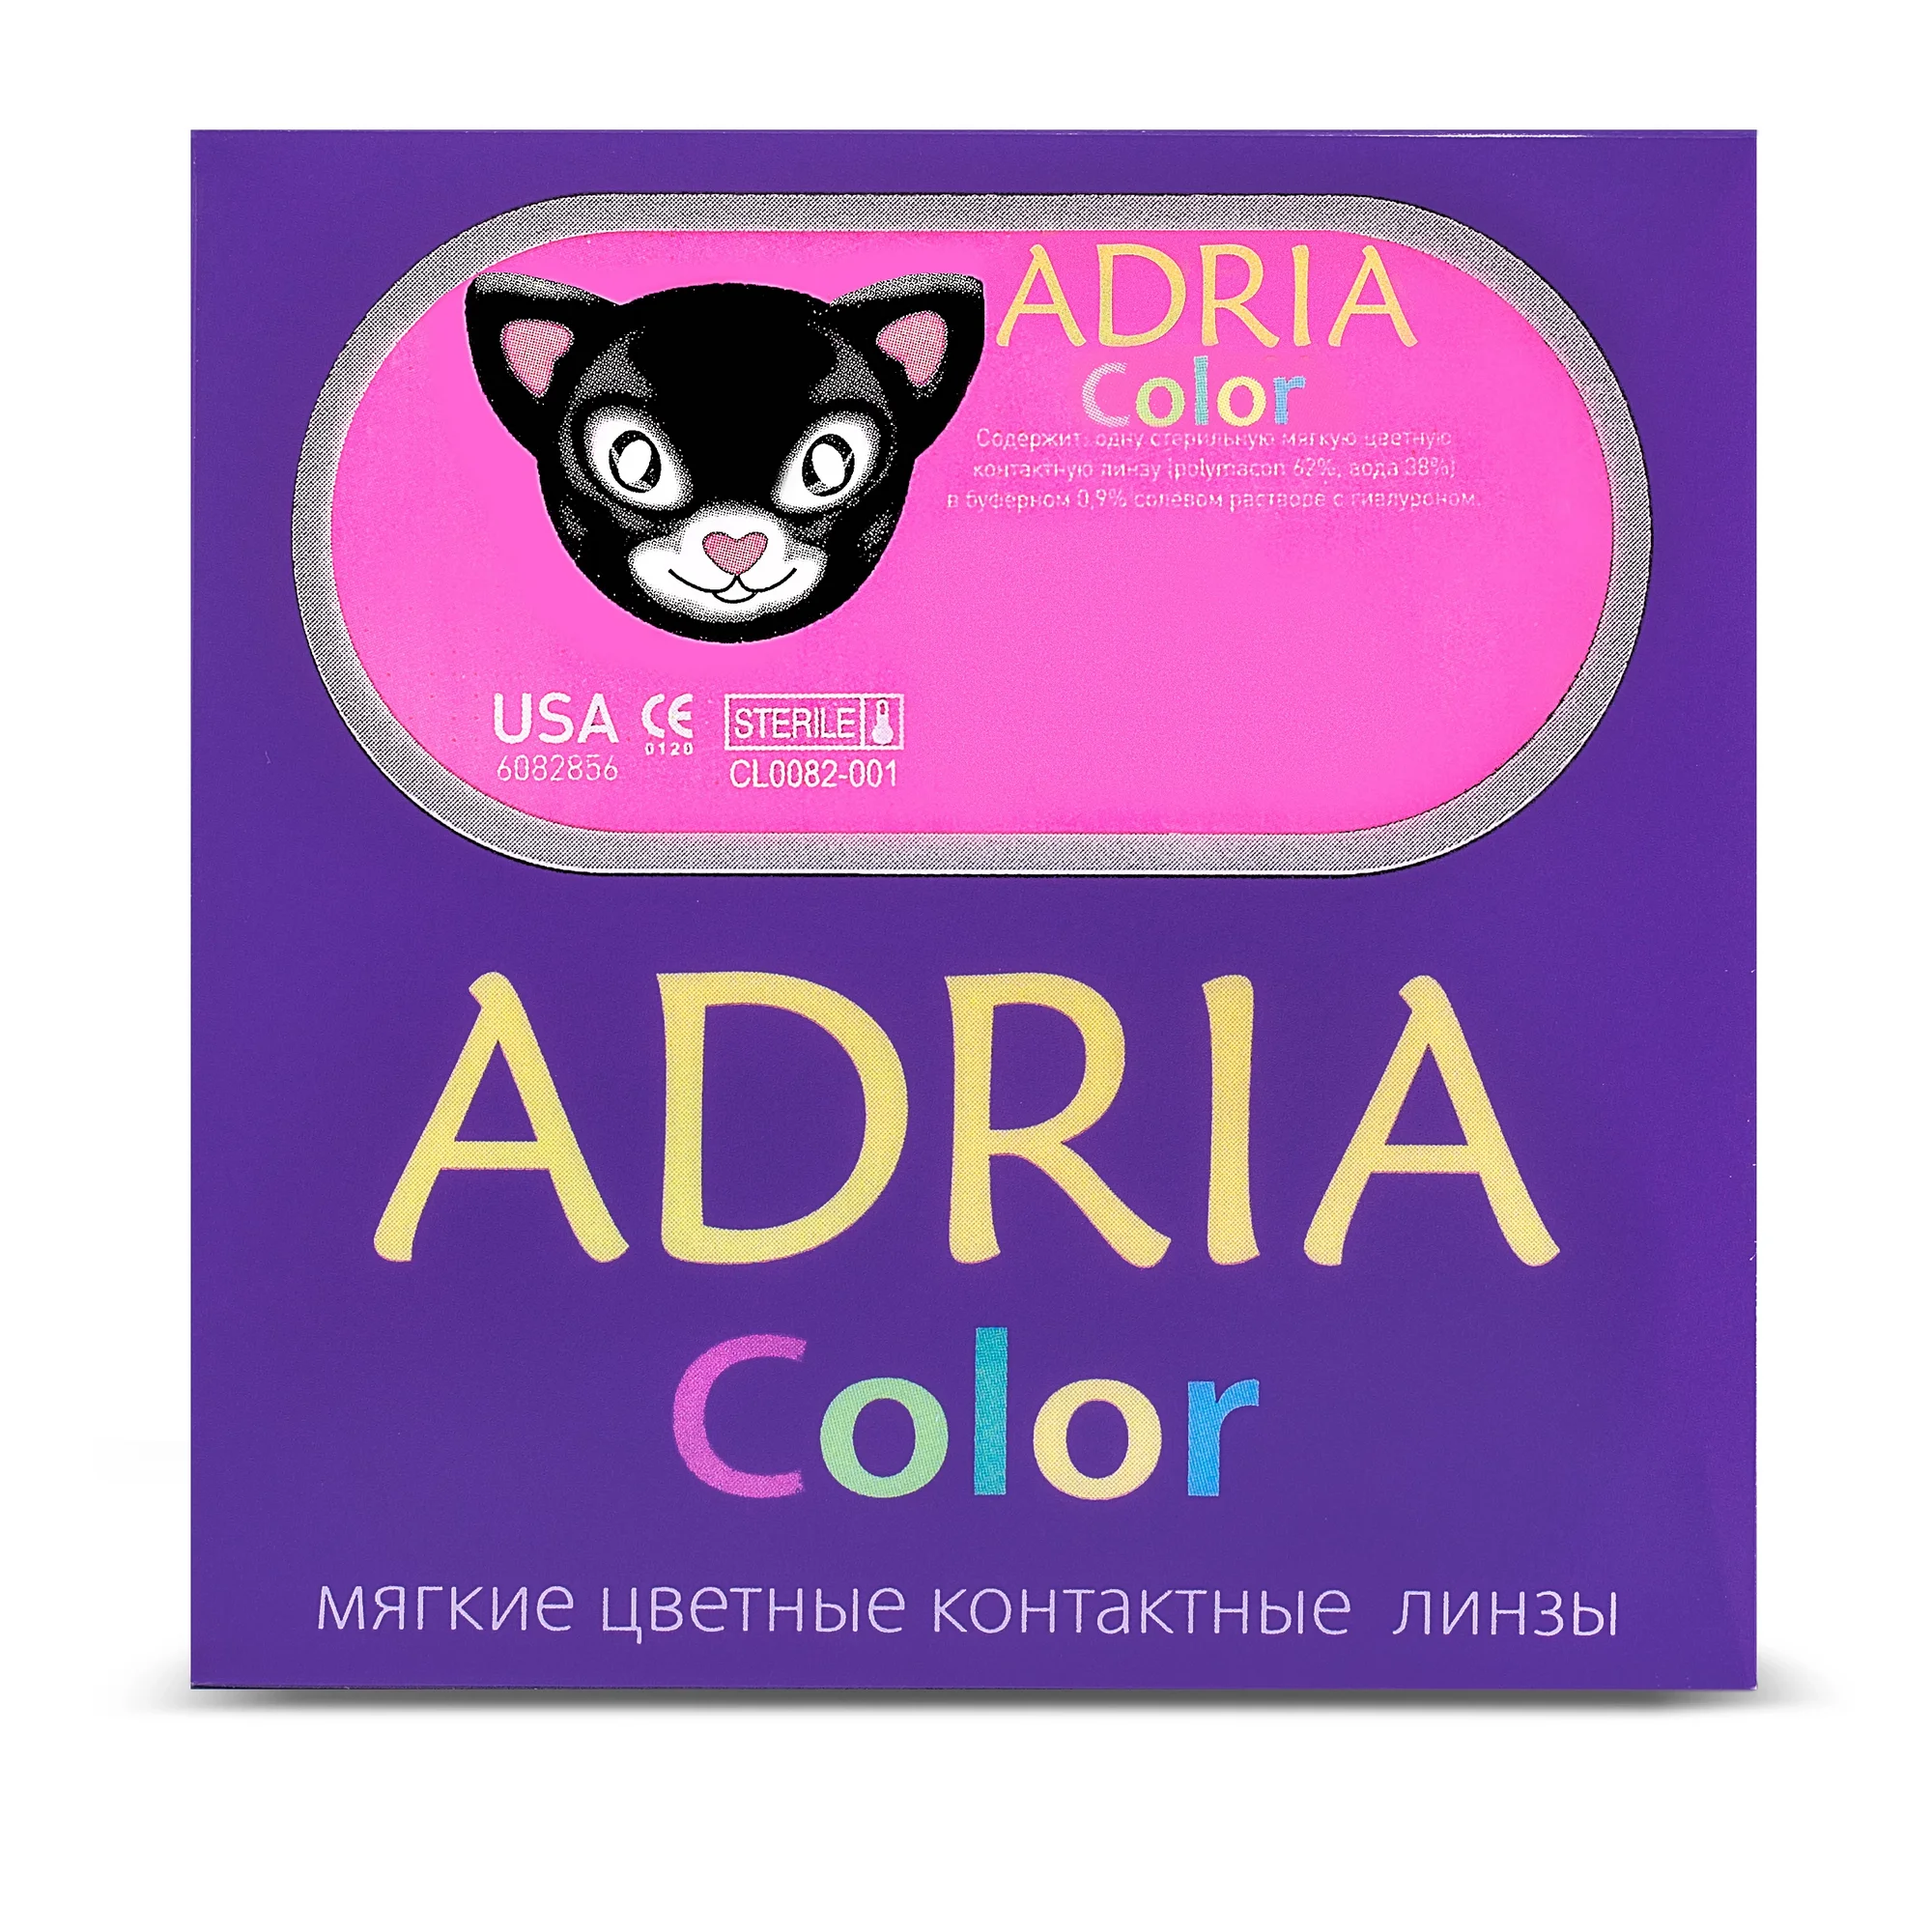 COLOR BOX ADRIA Color 2 Tone Gray (серый)